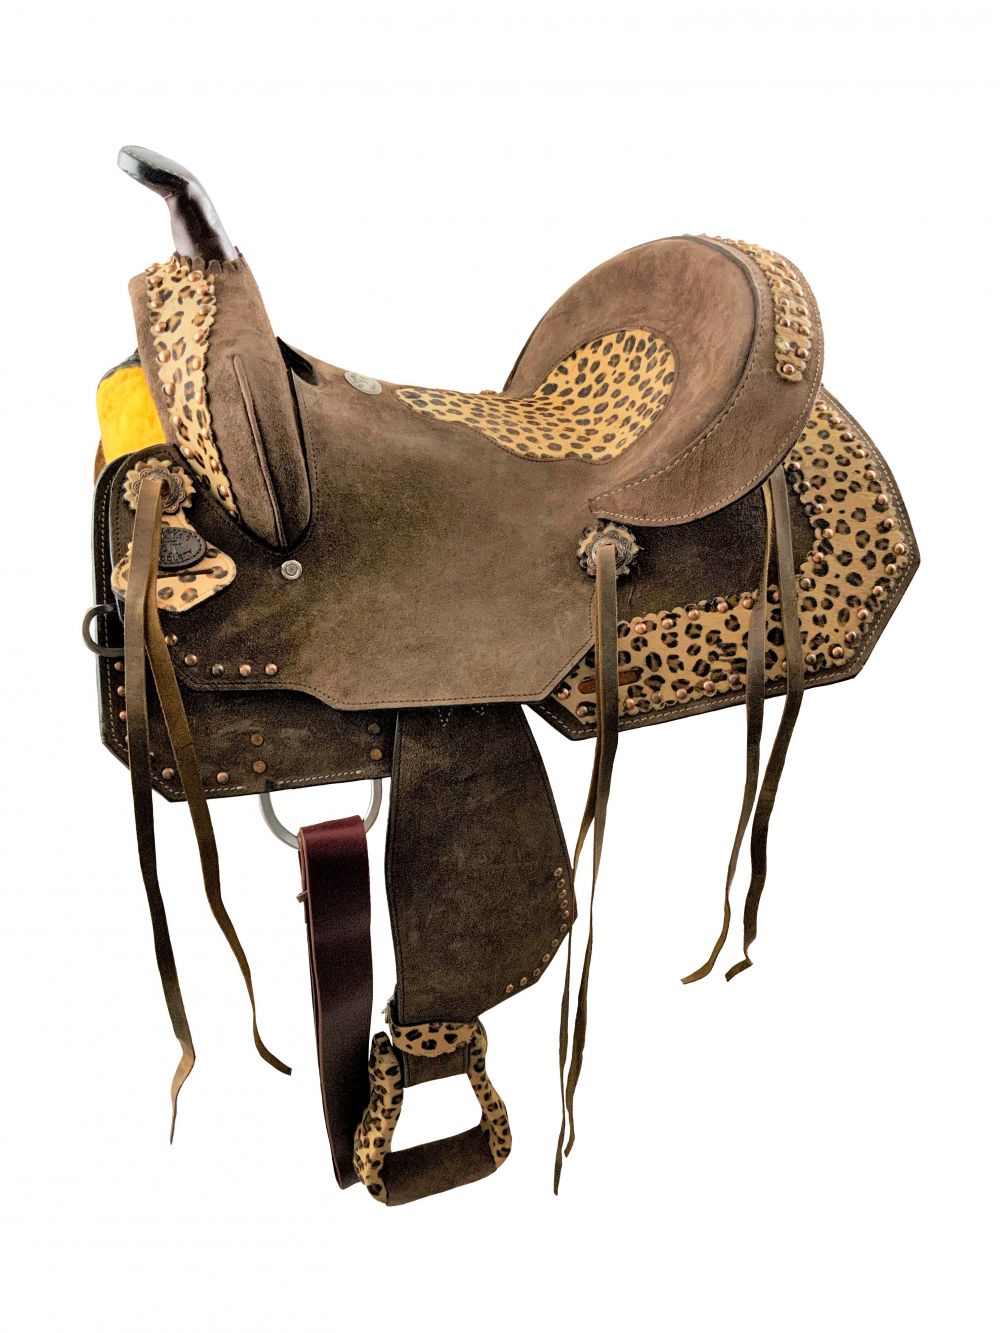 13"  Double T   Youth Hard Seat Barrel style saddle with Cheetah Seat Barrel Saddle Shiloh   